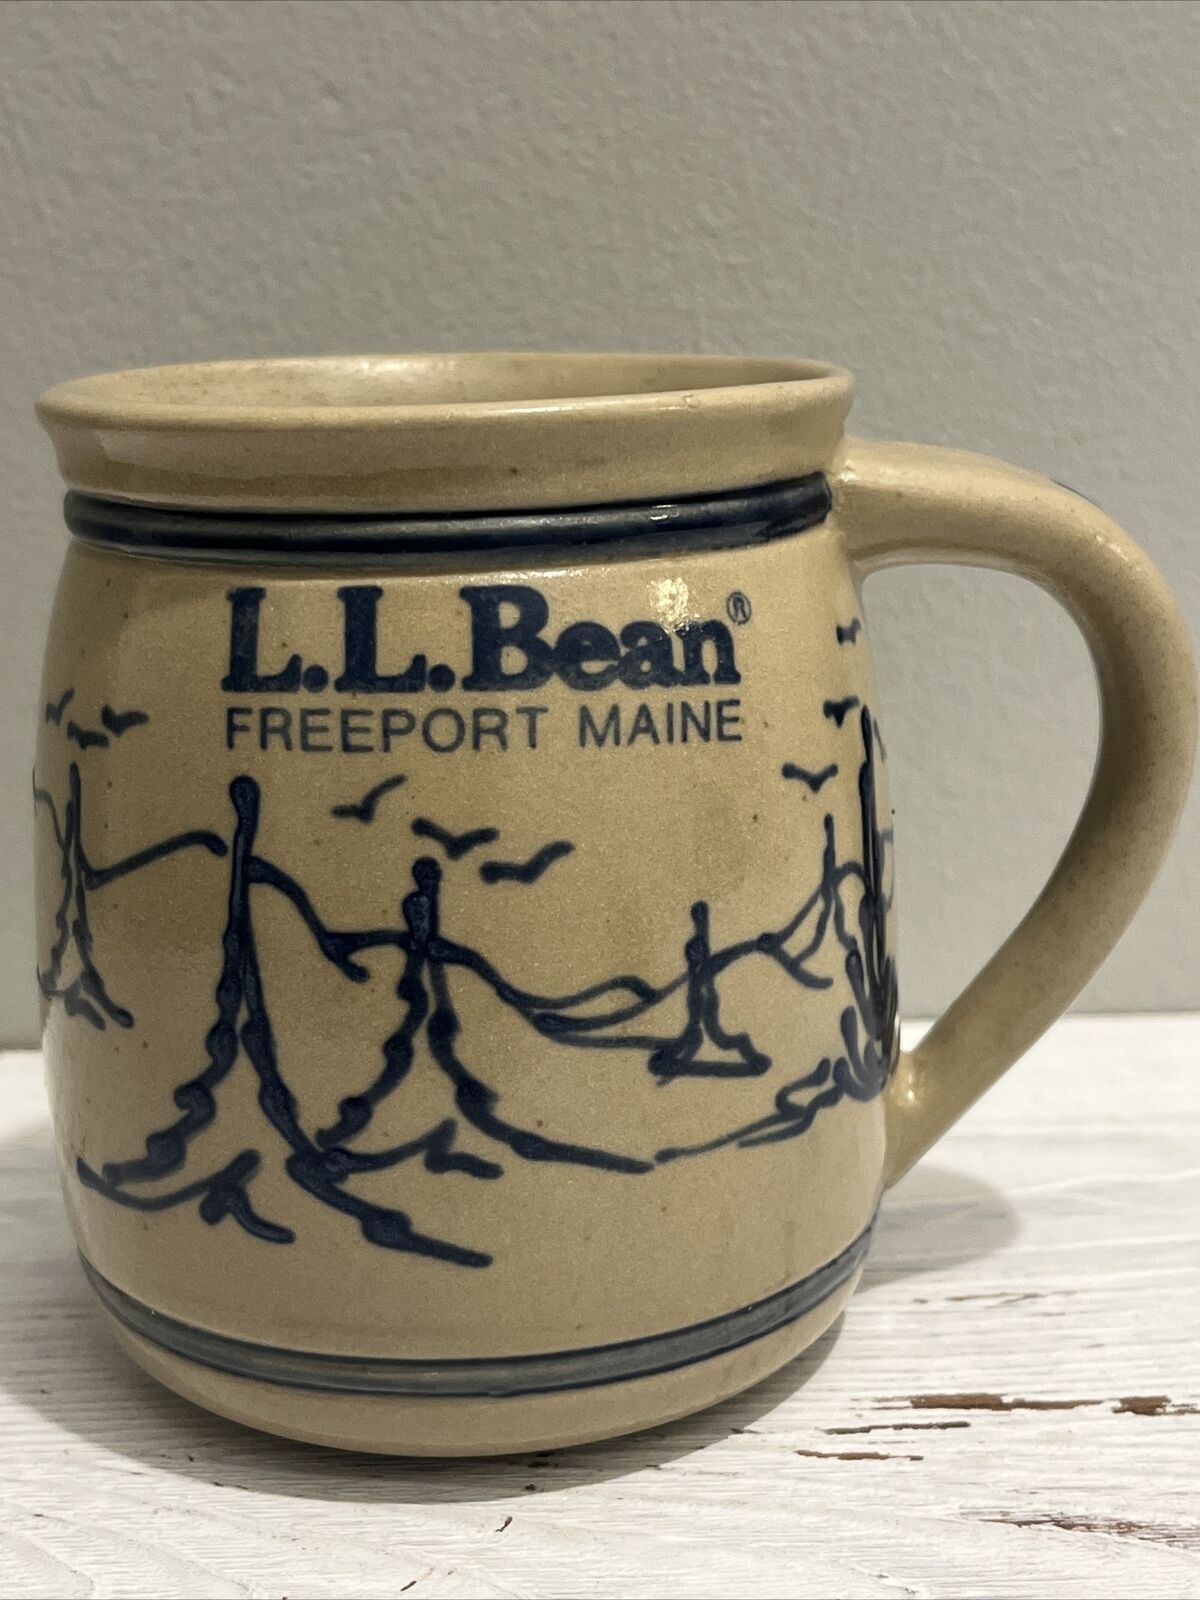 Vintage L.L. Bean Ceramic Mug Salt Glaze Rustic 1980s tan blue trees